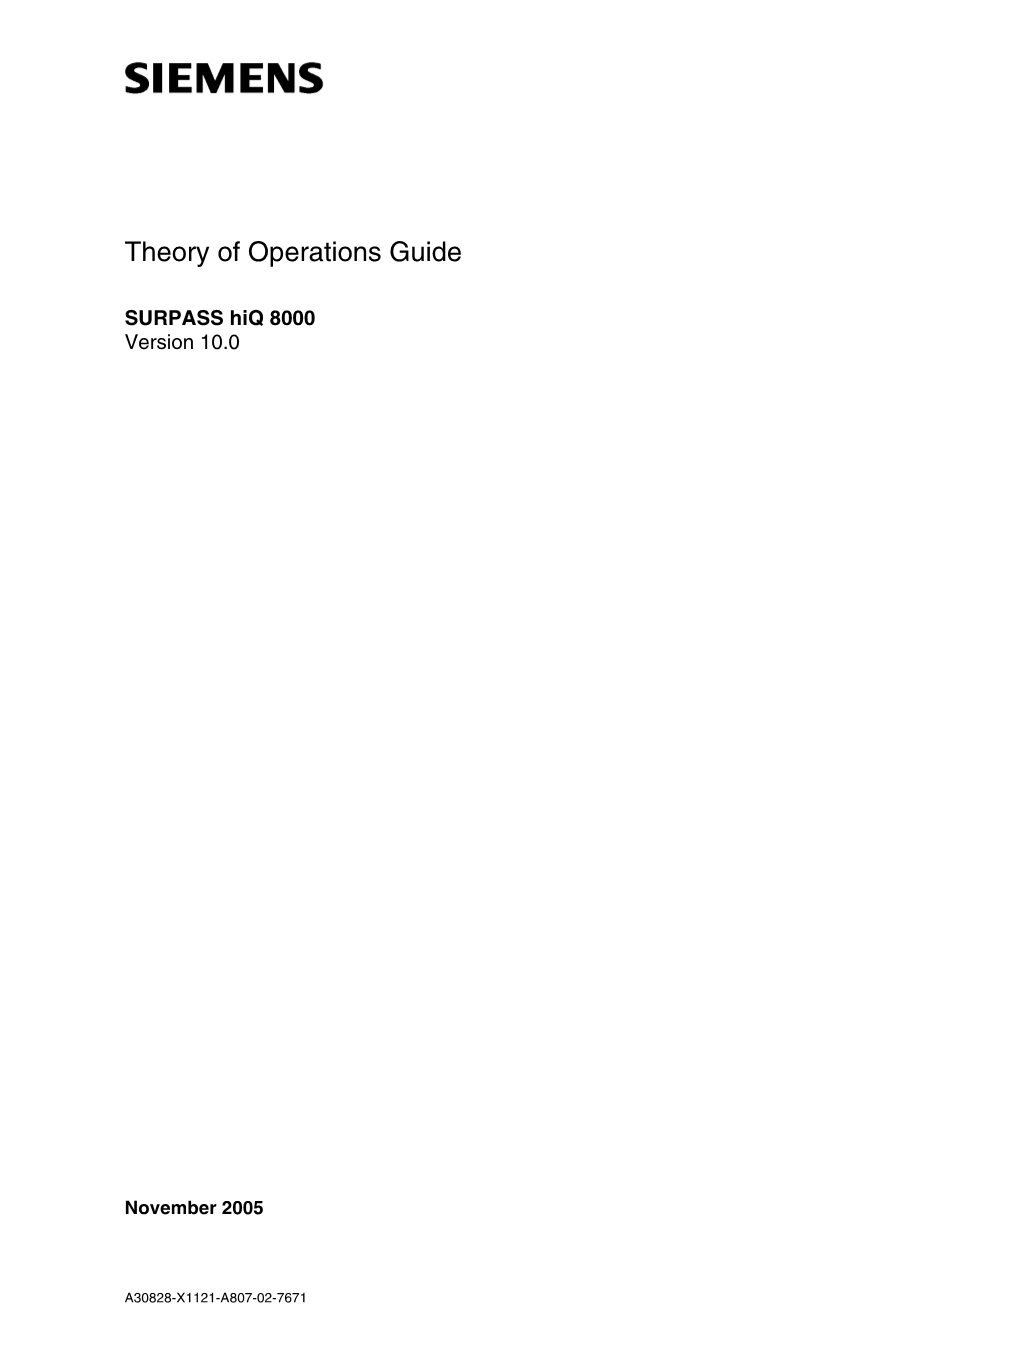 Siemens Documentation, Book A30828-X1121-A807-02-7671